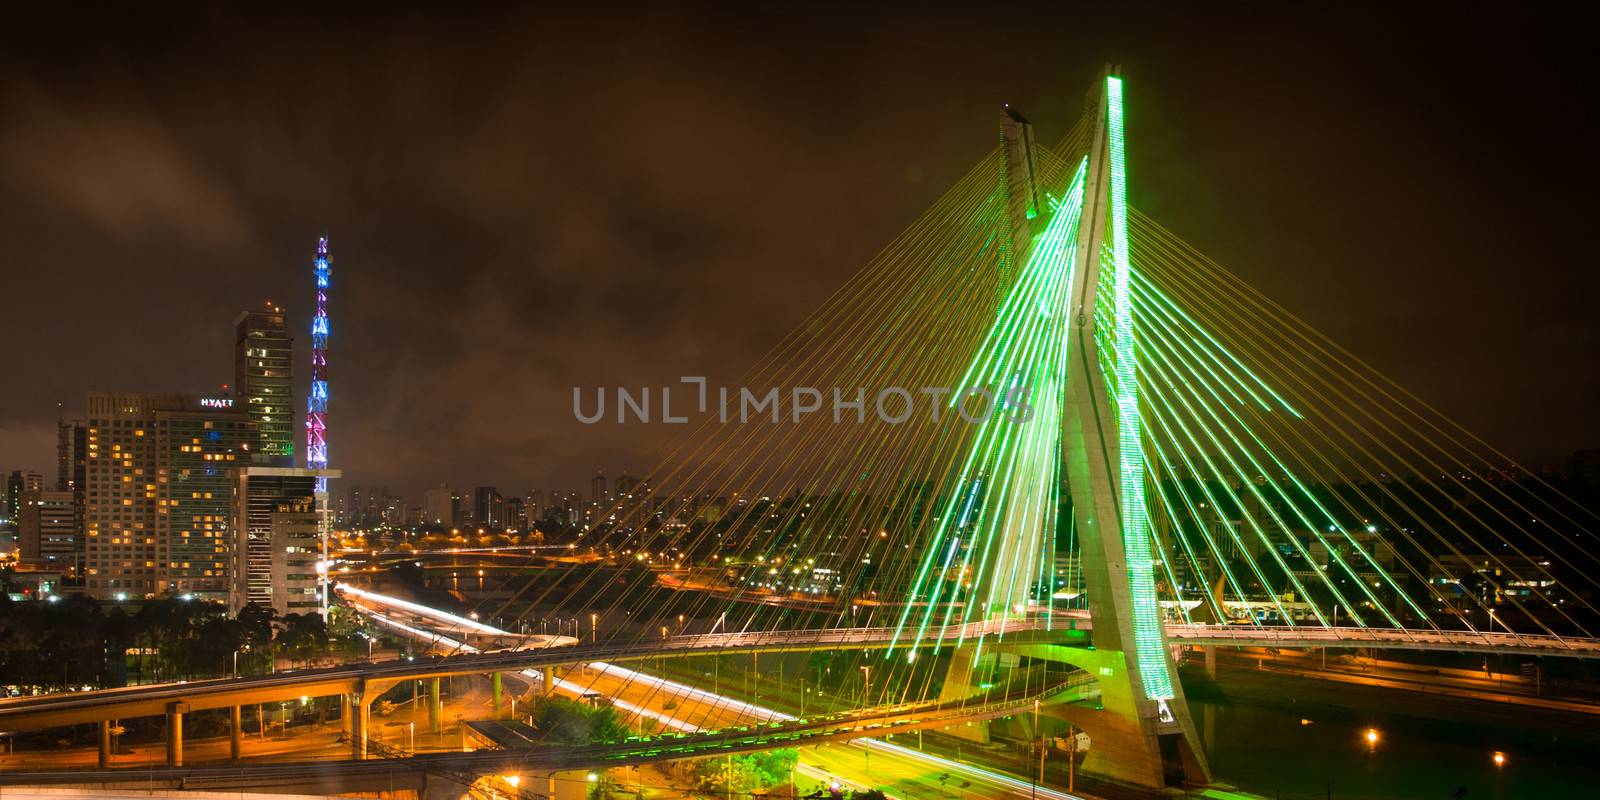 Sao Paulo city at night by CelsoDiniz